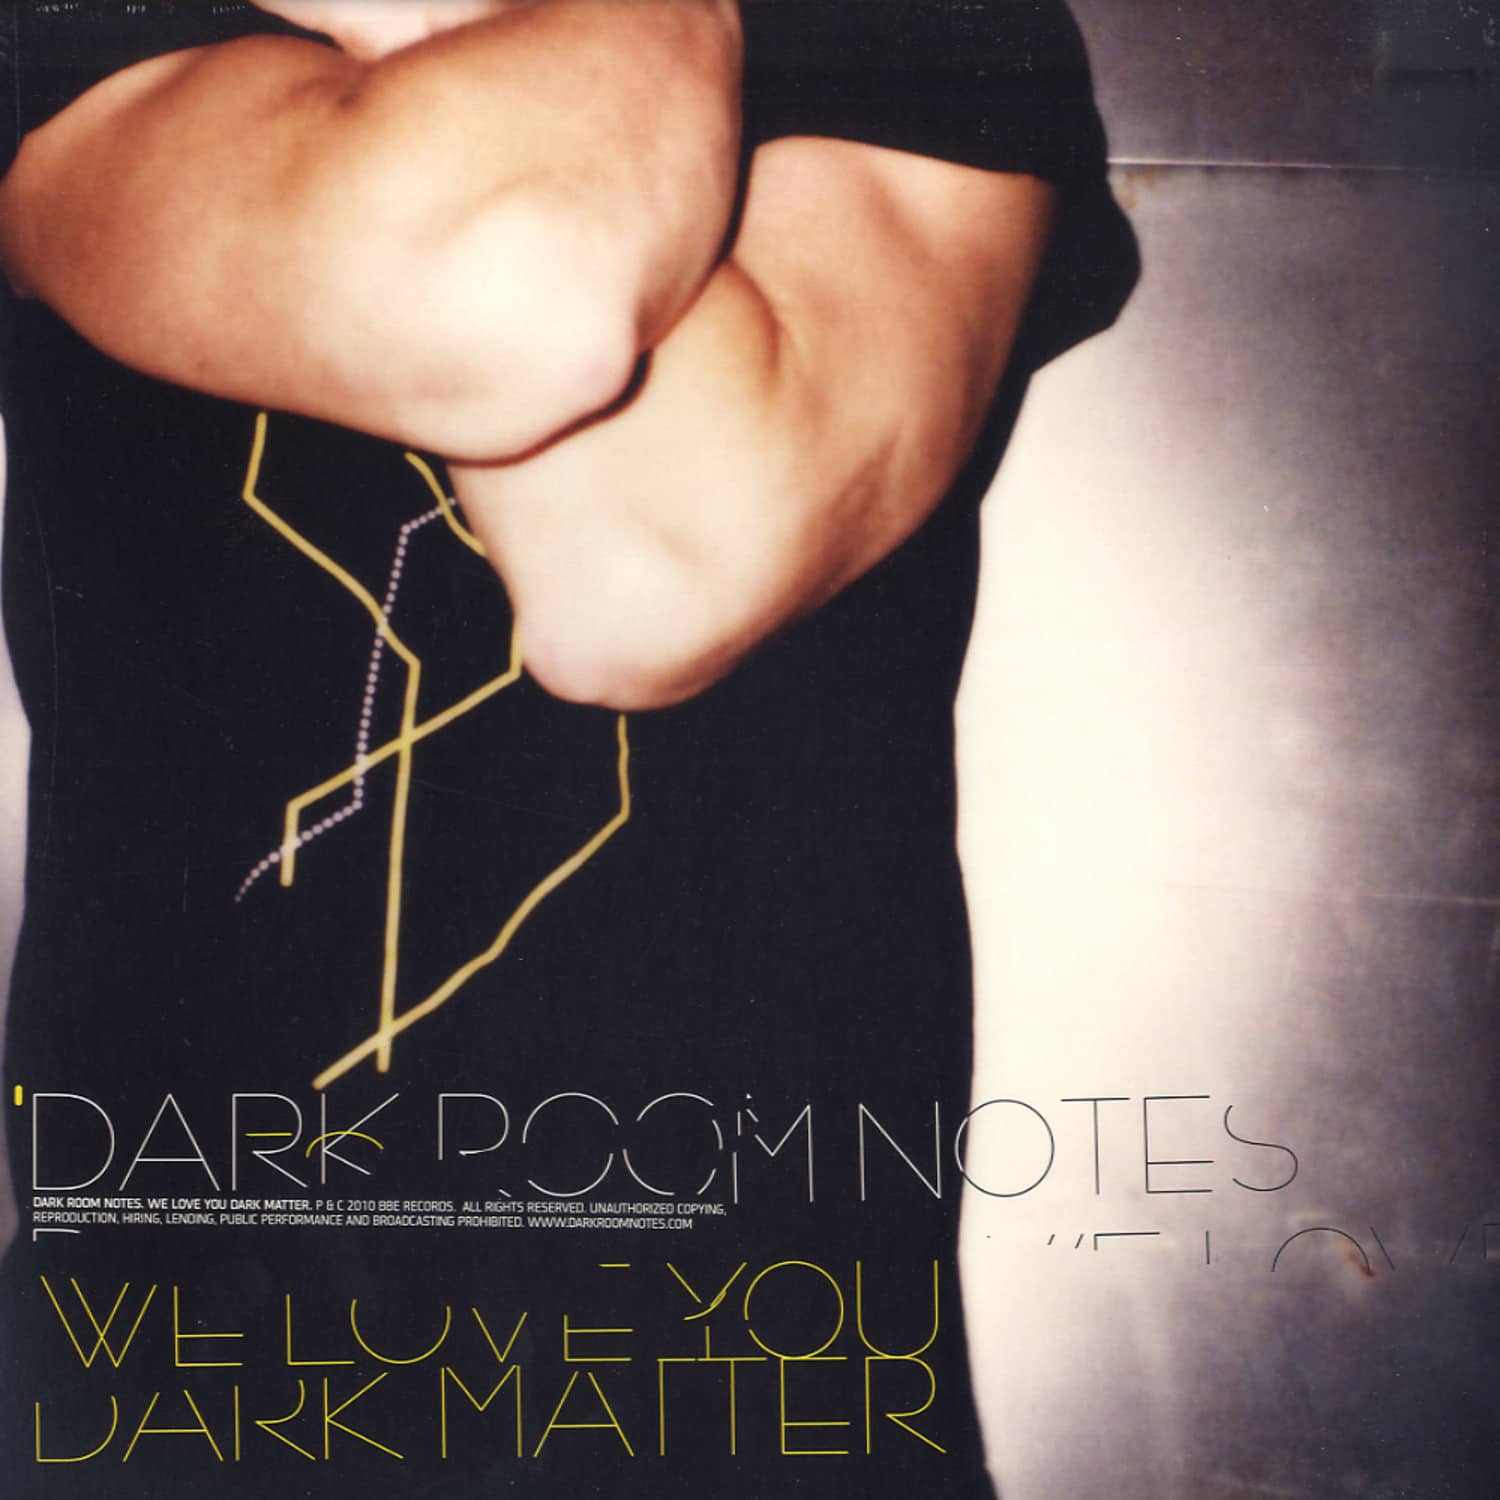 Dark Room Notes - WE LOVE YOU DARK MATTER 